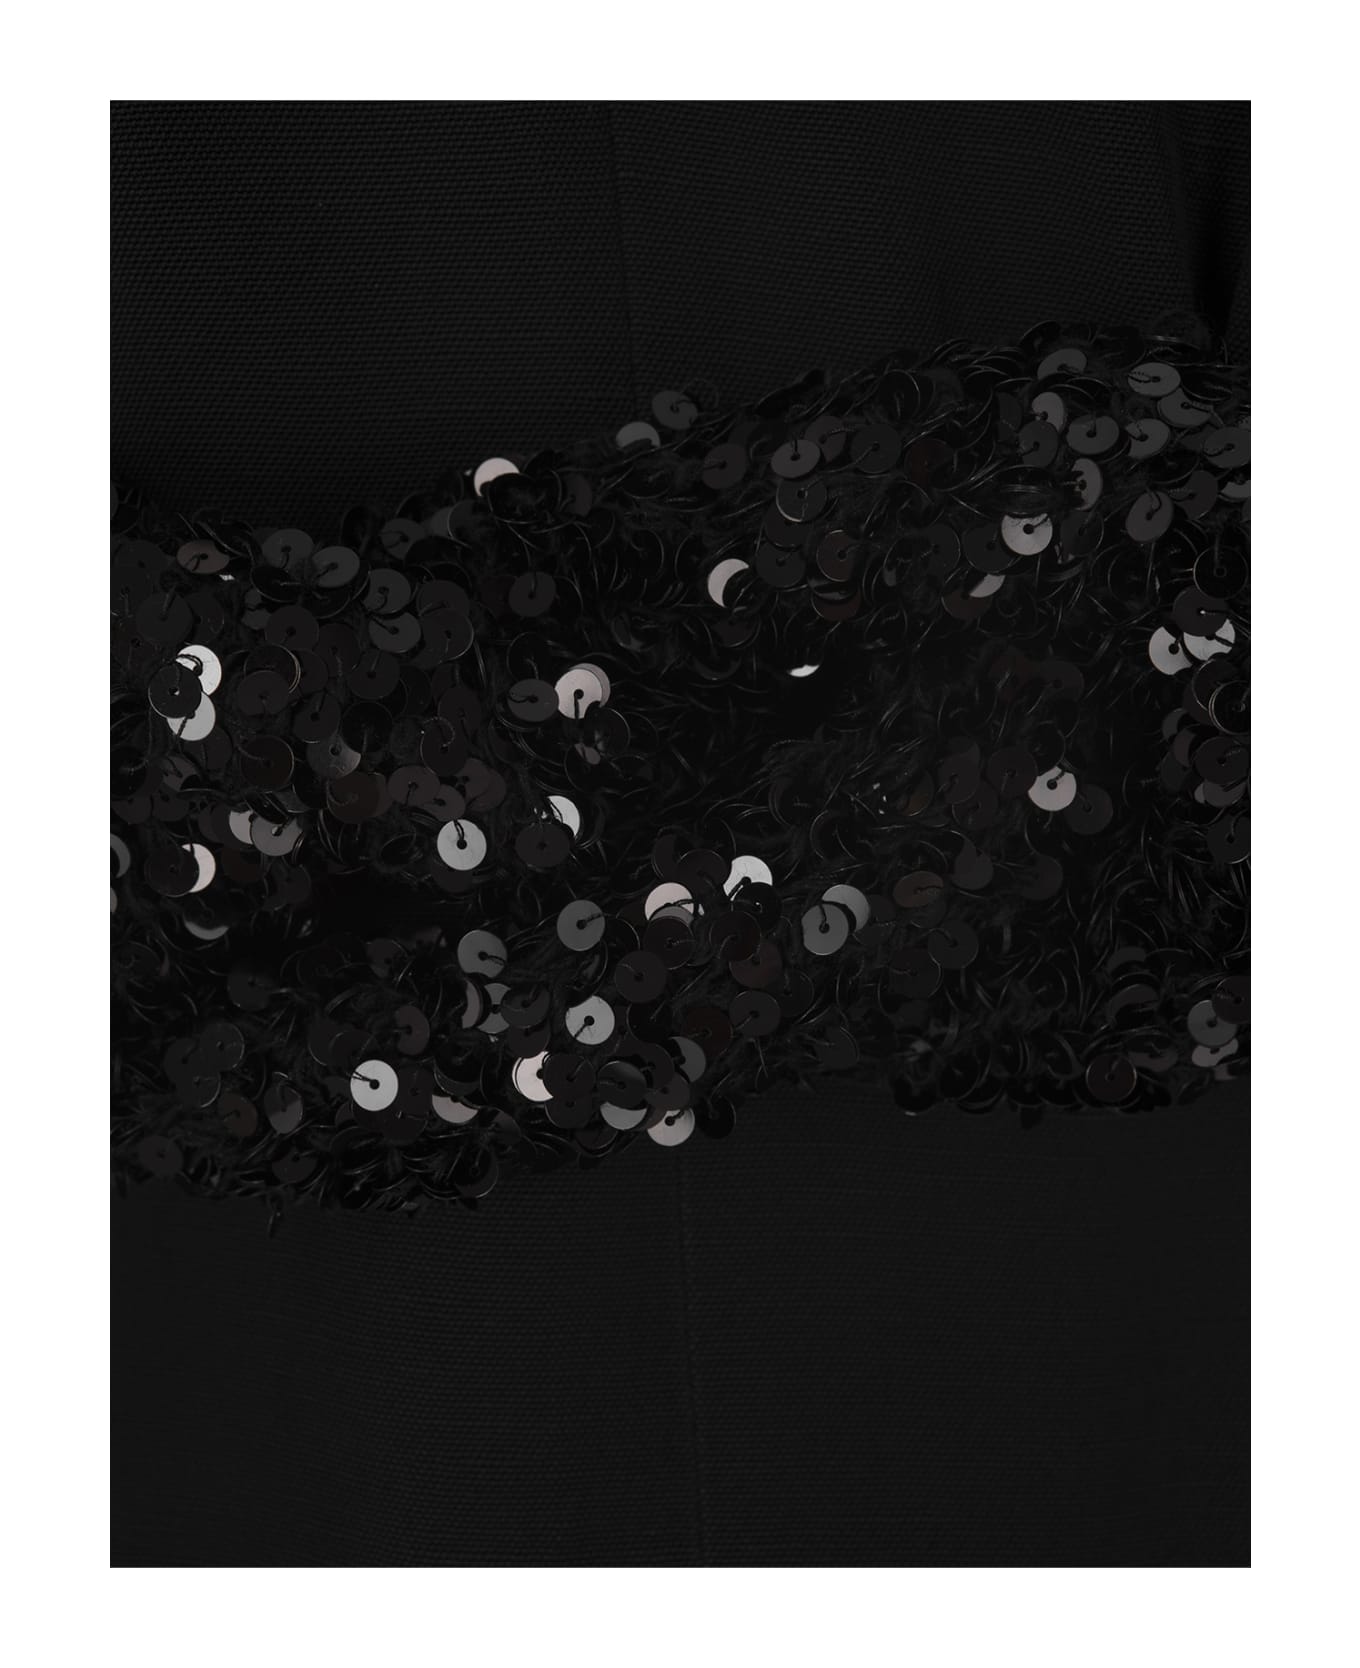 Jil Sander Black Long Elegant Dress - Nero